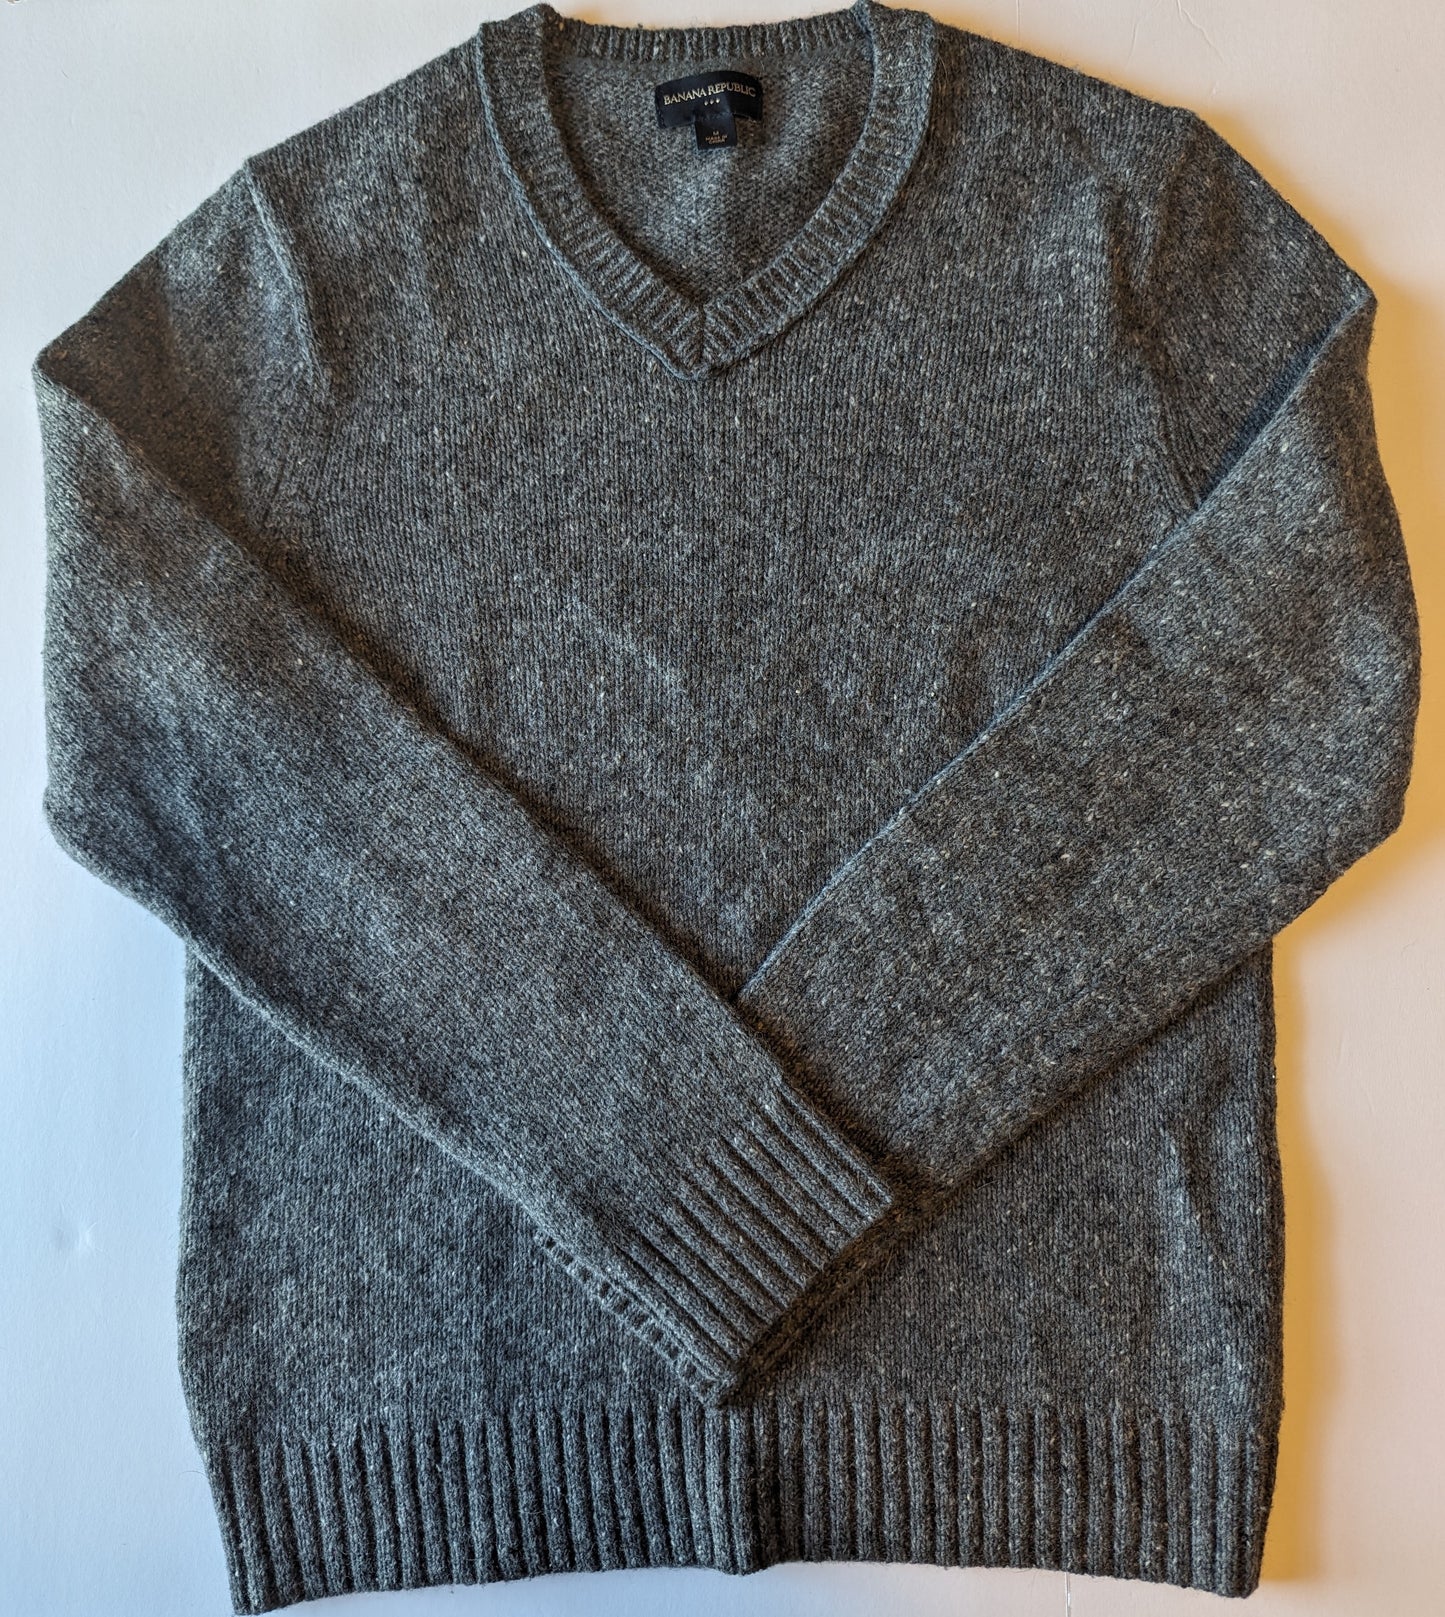 Banana Republic men's wool grey sweater euc size m